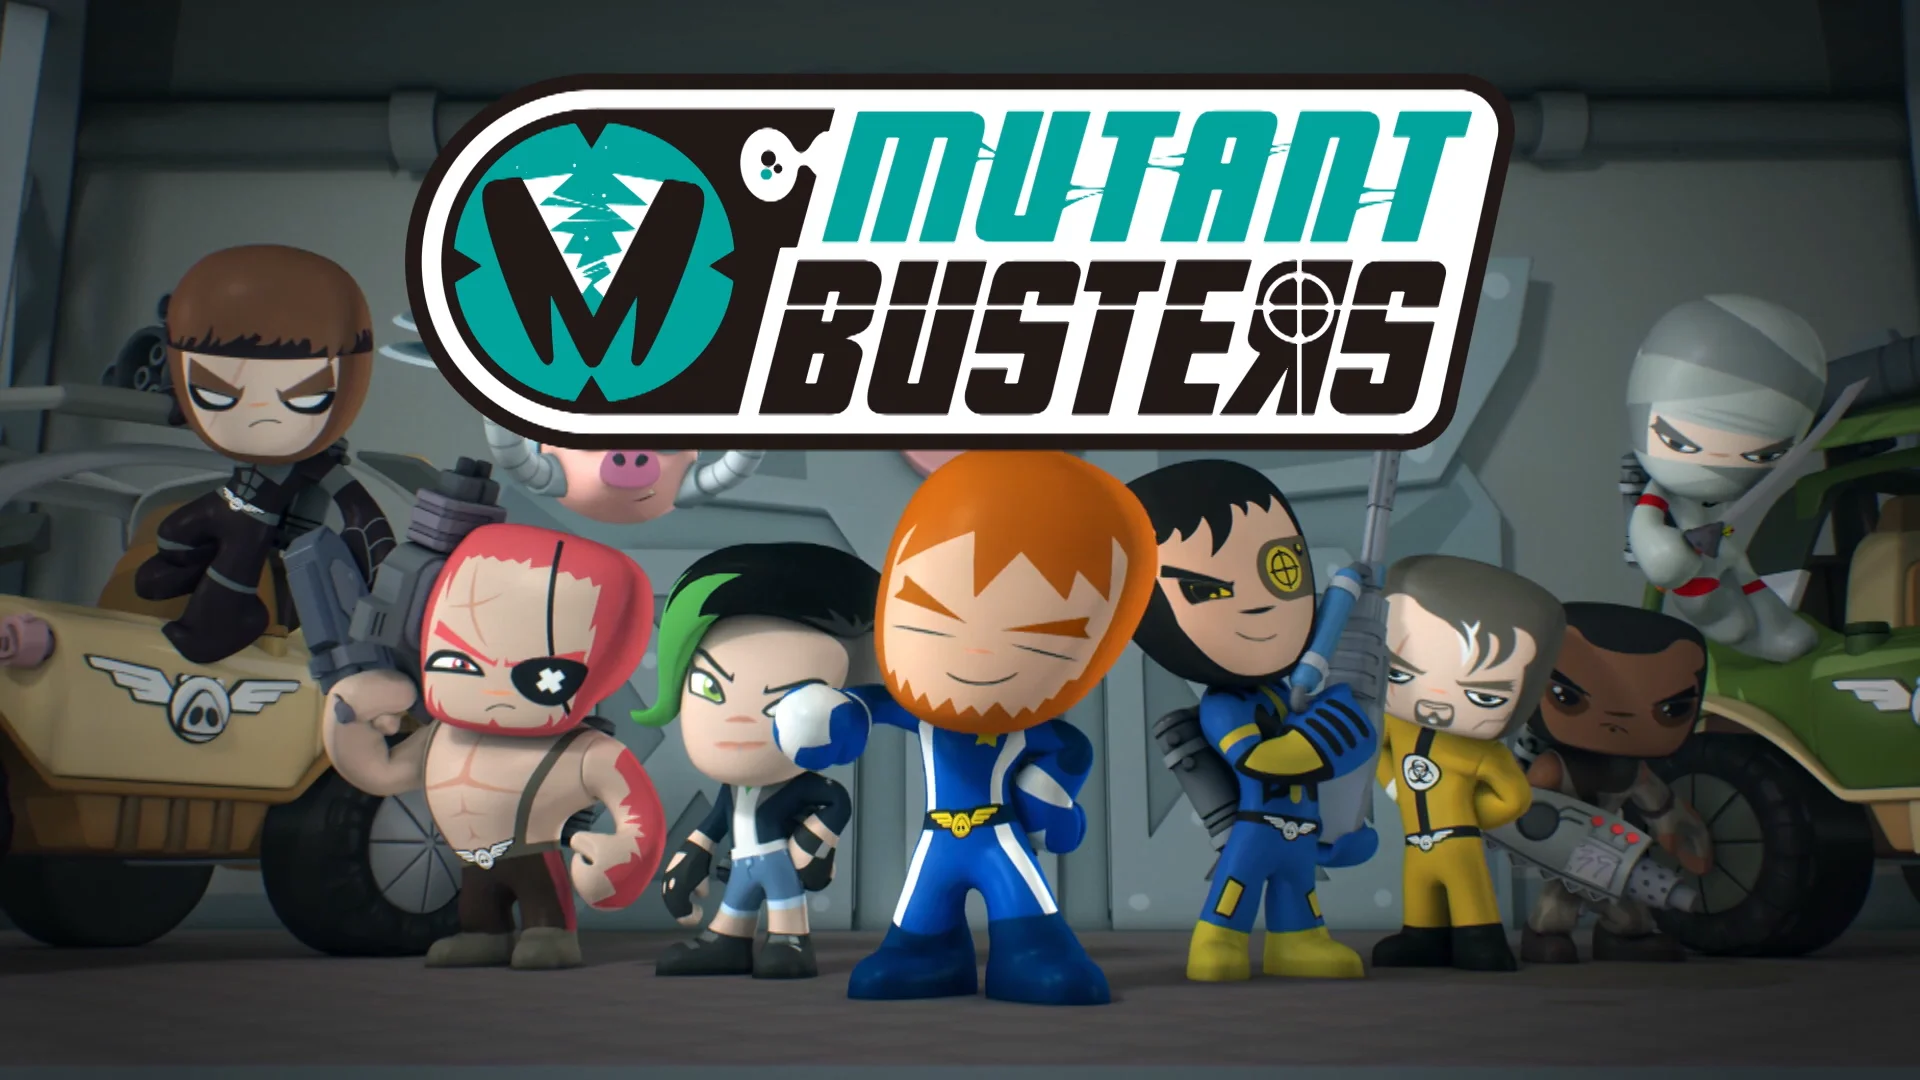 Kidscreen » Archive » Mutant Busters bursts onto Neox Kidz